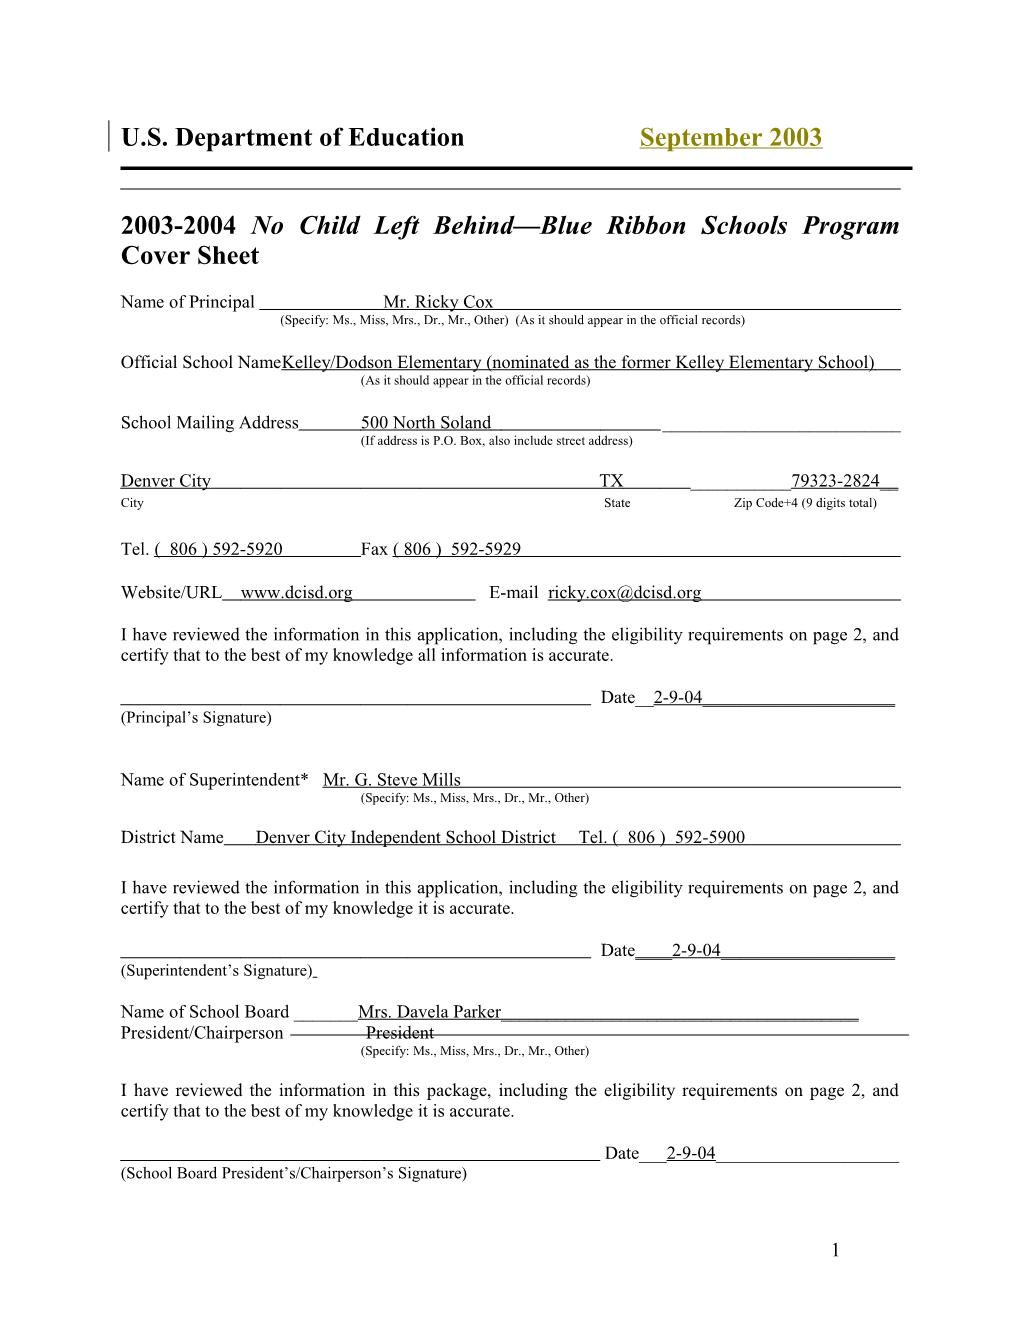 Kelley/Dodson Elementary School 2004 No Child Left Behind-Blue Ribbon School Application